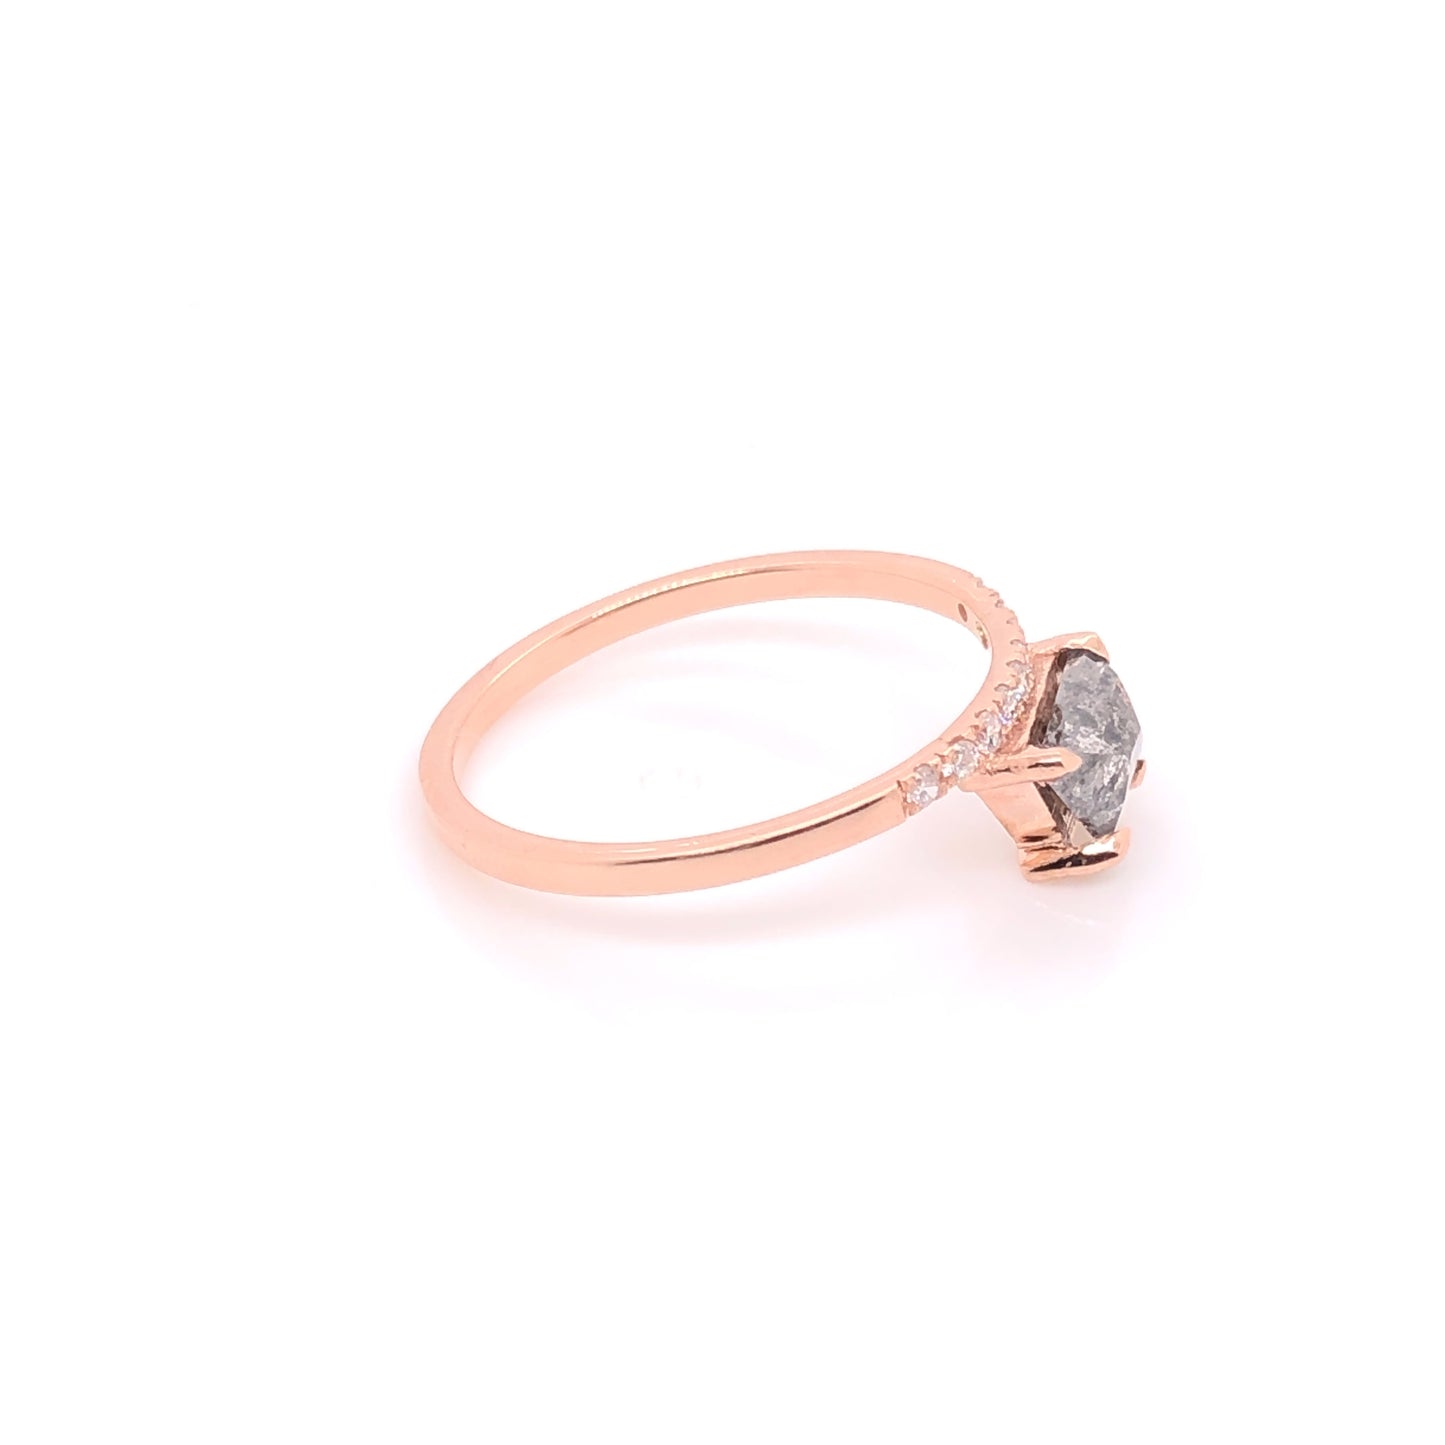 IMMEDIATE DELIVERY / Salt &amp; Pepper Diamond Ring Hexagonal cut with diamonds / 14k Rose Gold / Size 7.25